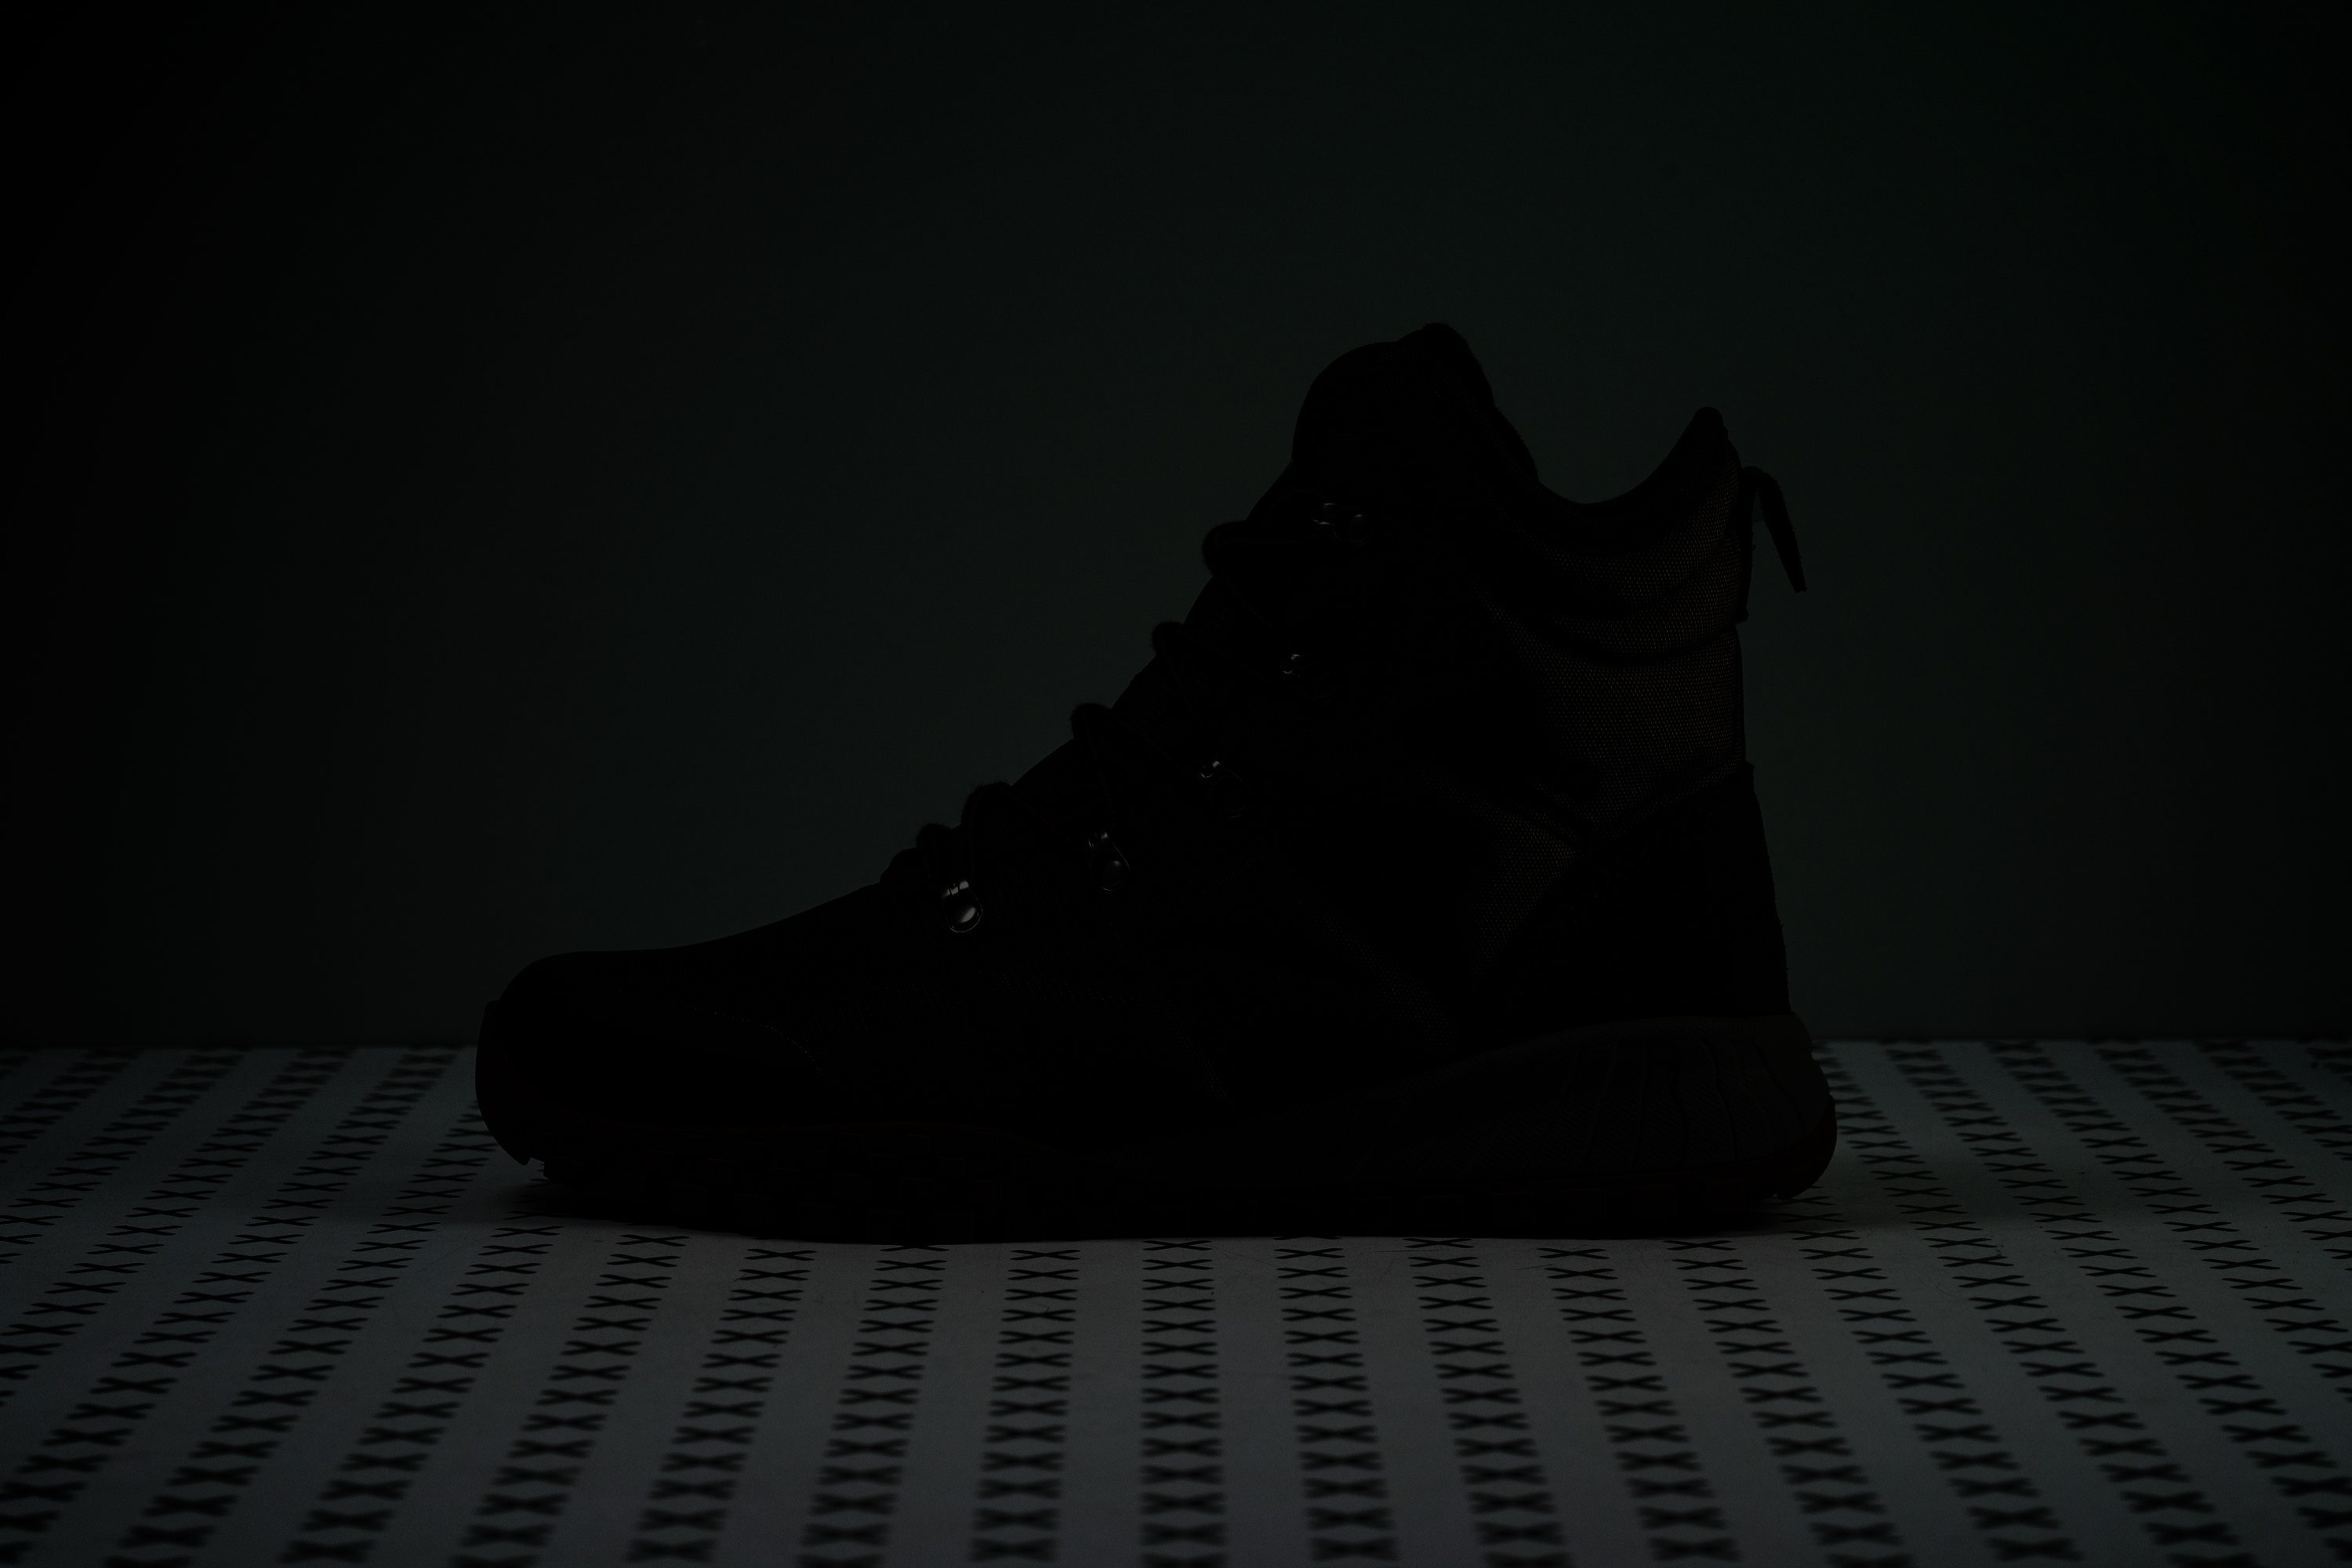 Columbia zapatillas de running Adidas hombre pista talla 33.5 Reflective elements